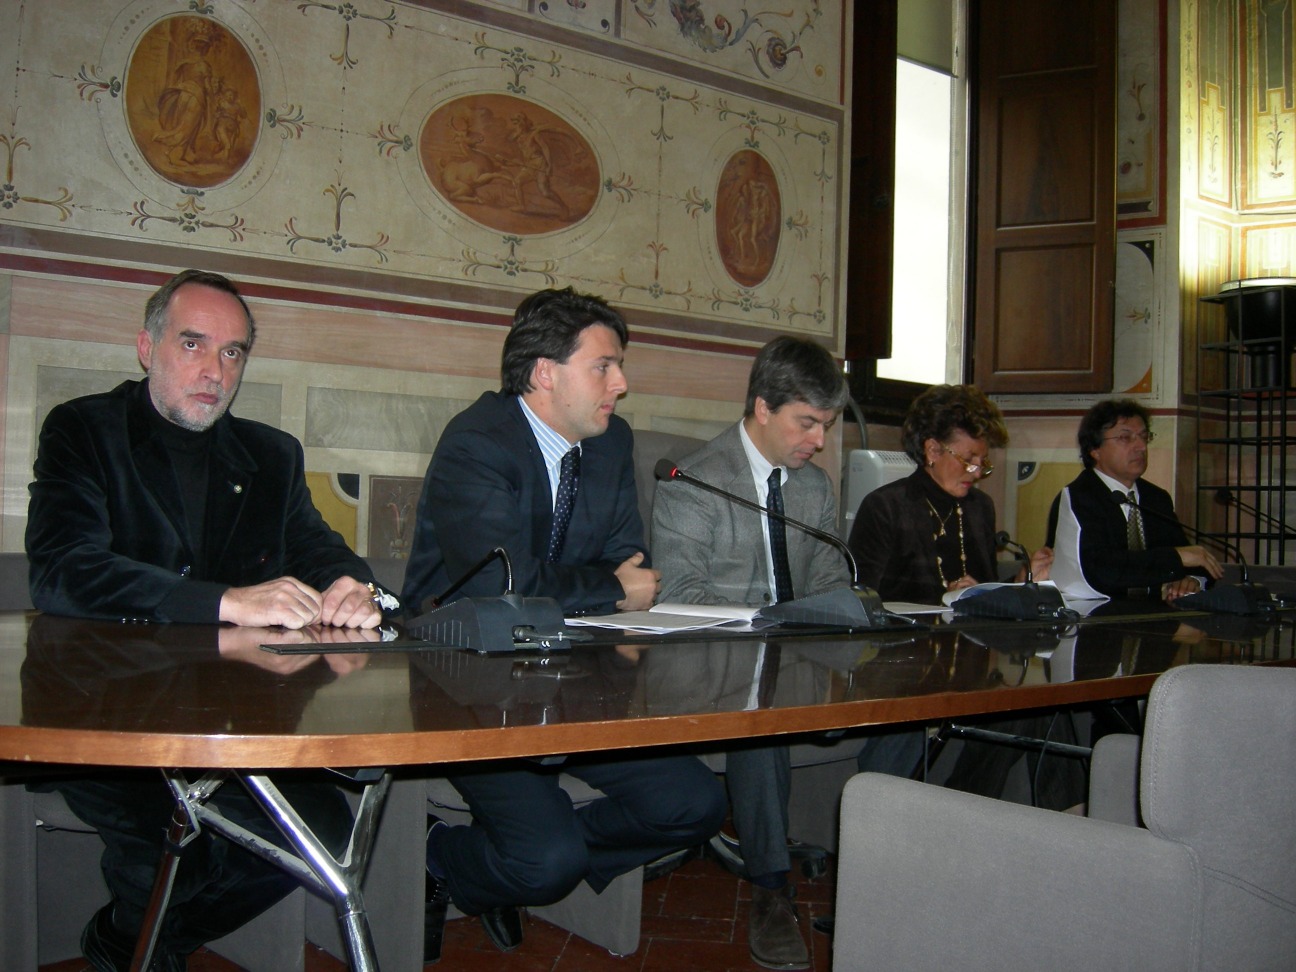 Da sinistra: Gori, Renzi, Domenici, Folonari, Preiti